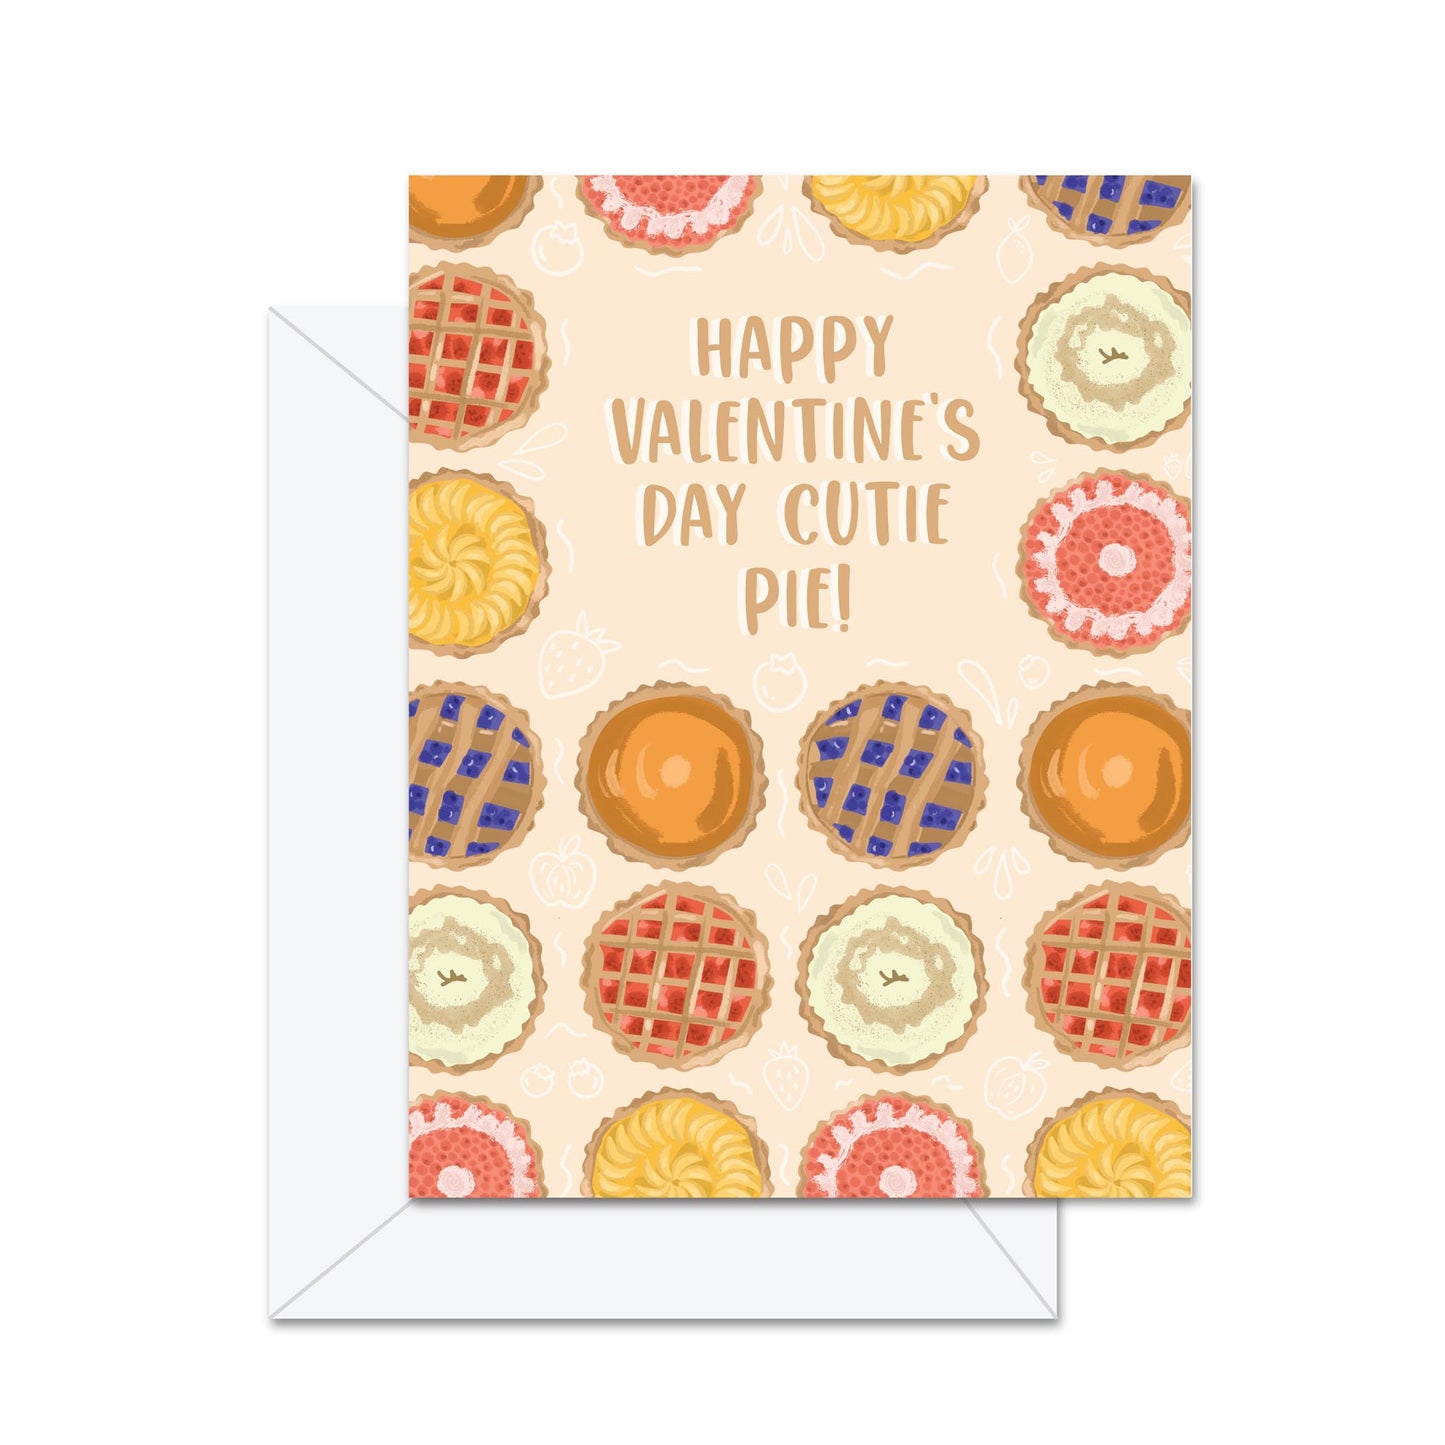 Happy Valentine's Day Cutie Pie! - Greeting Card